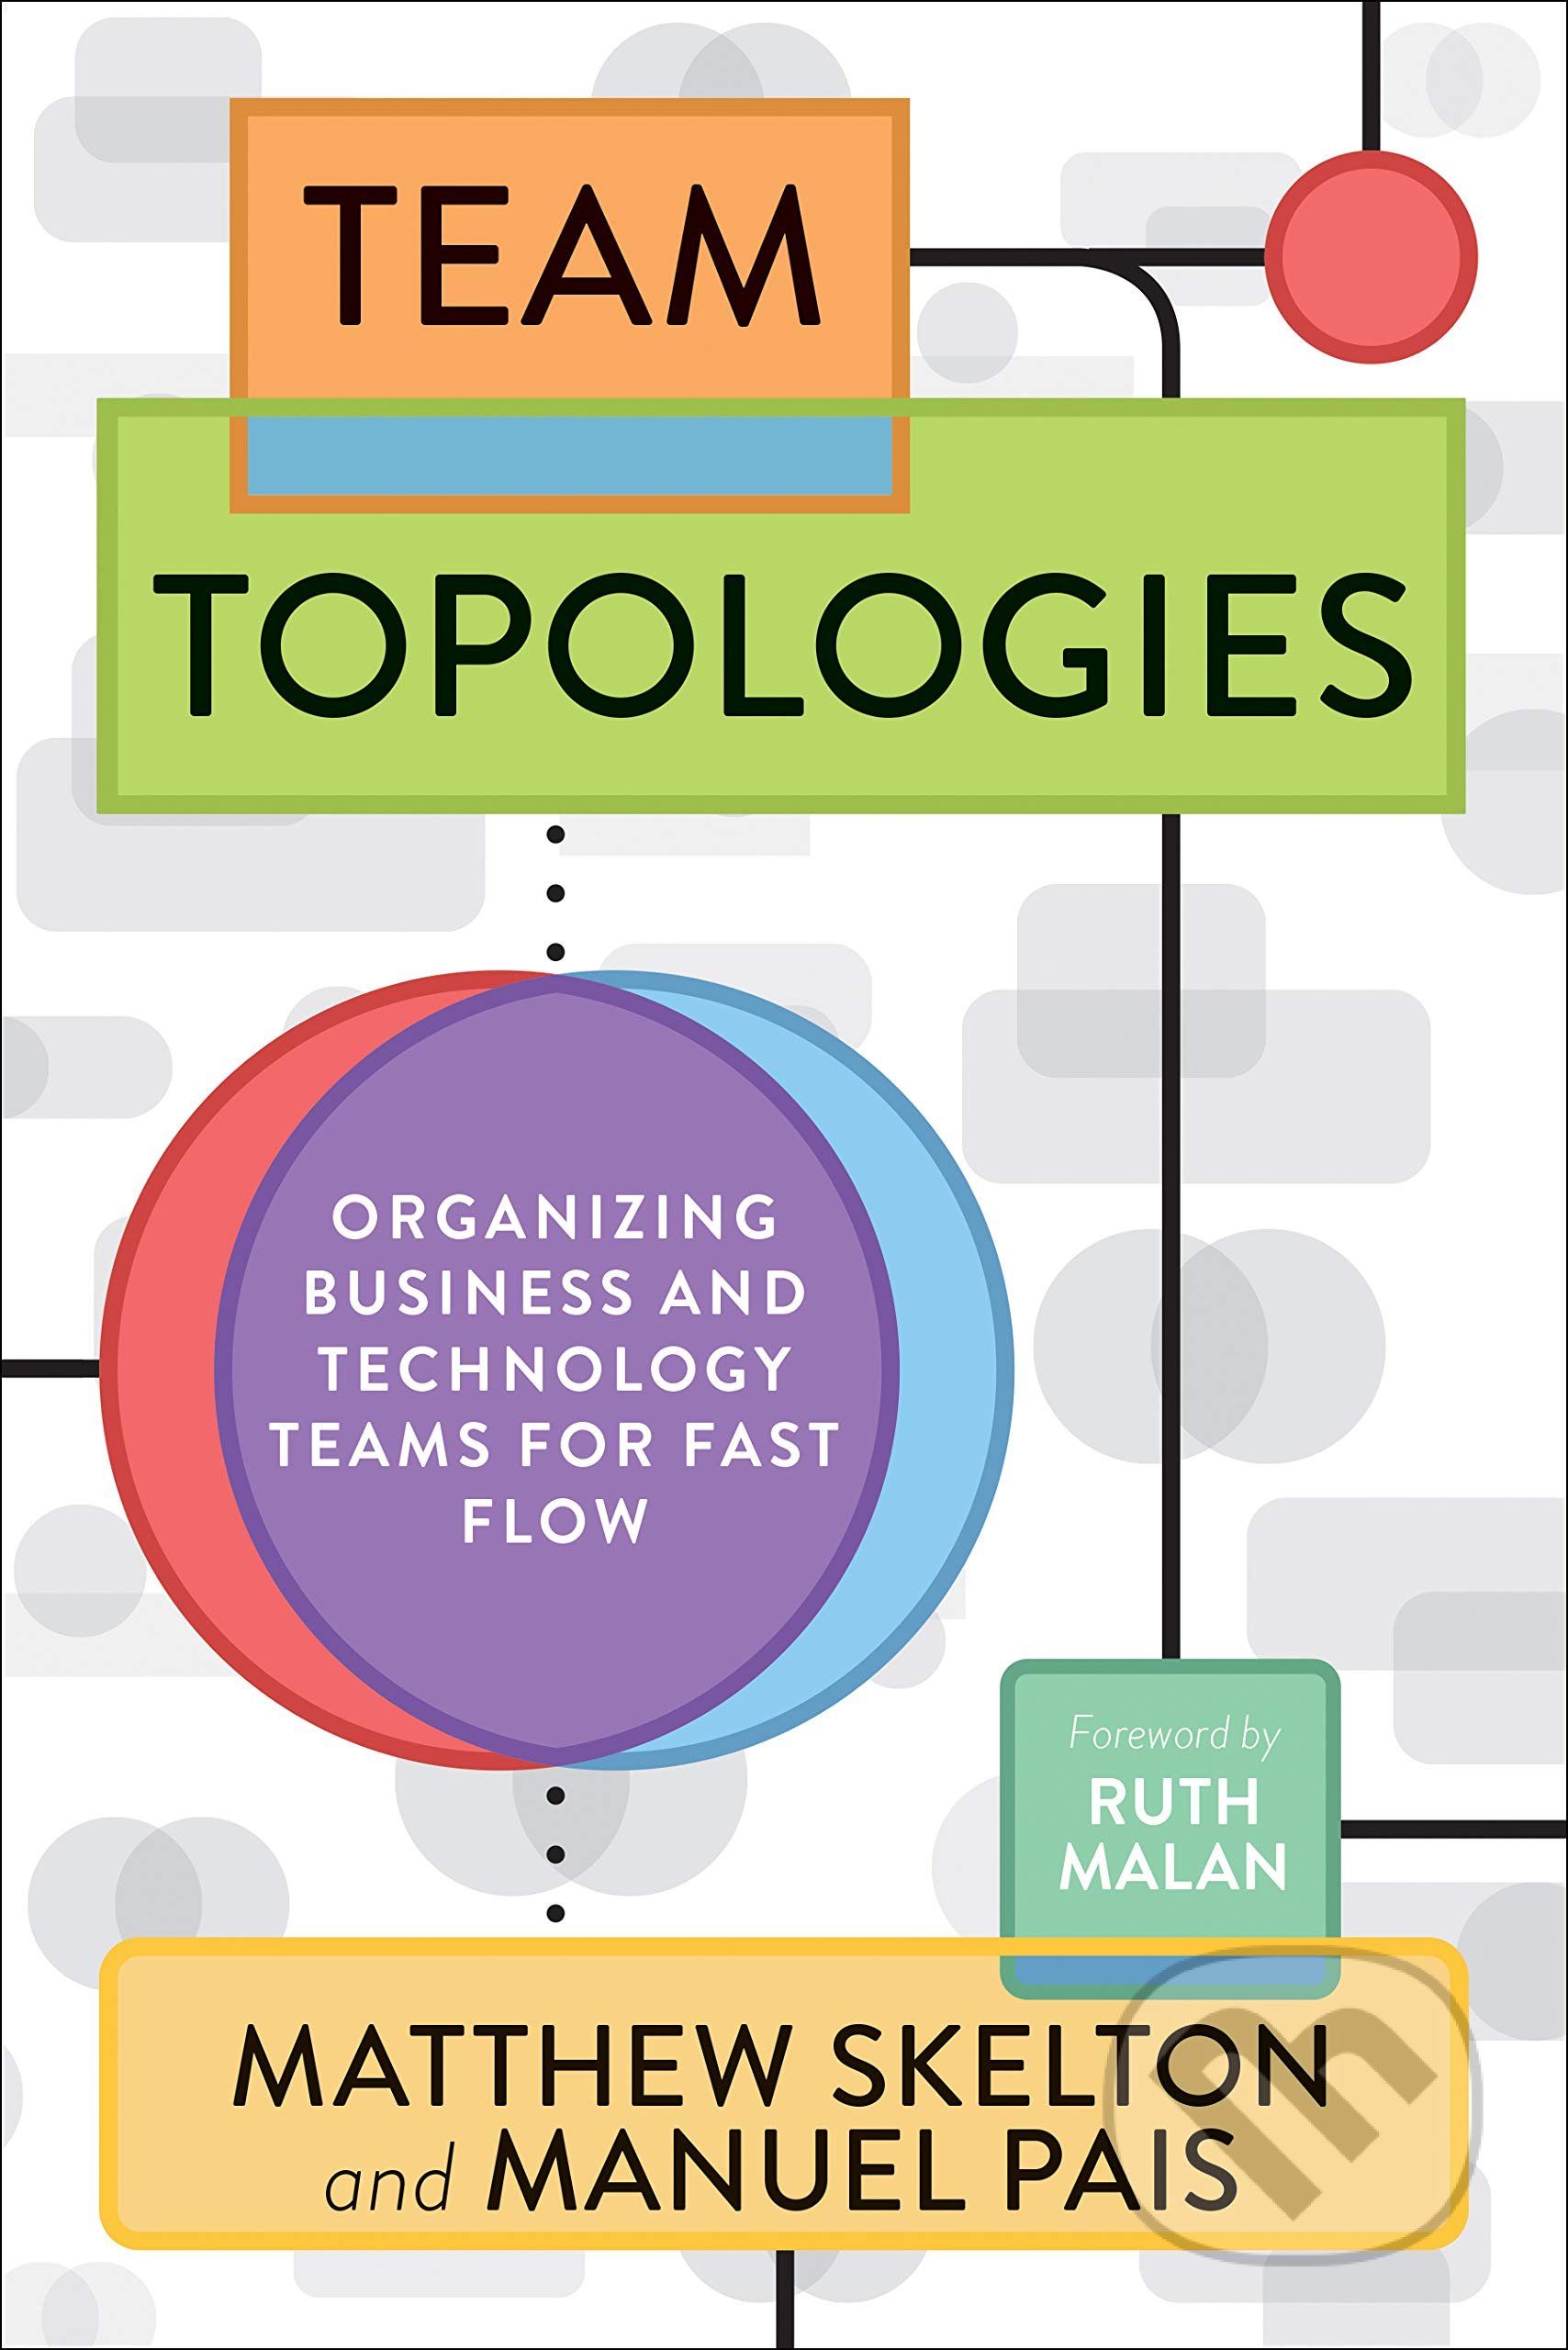 Team Topologies - Matthew Skelton, Manuel Pais, IT Revolution, 2019